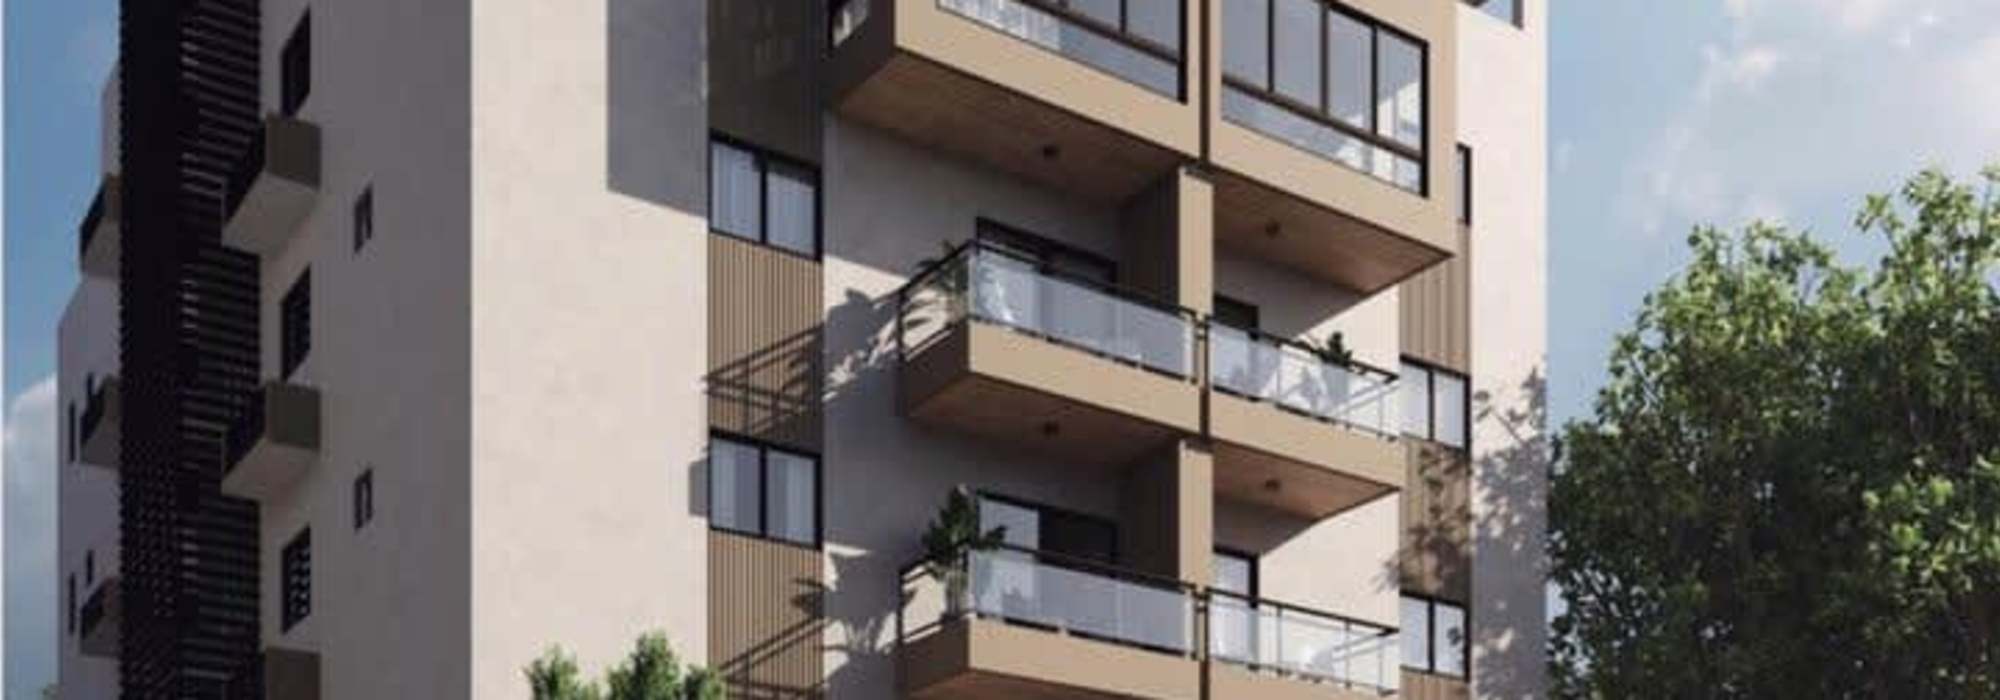 Apartments for sale in Viejo Arroyo Hondo in Santo Domingo